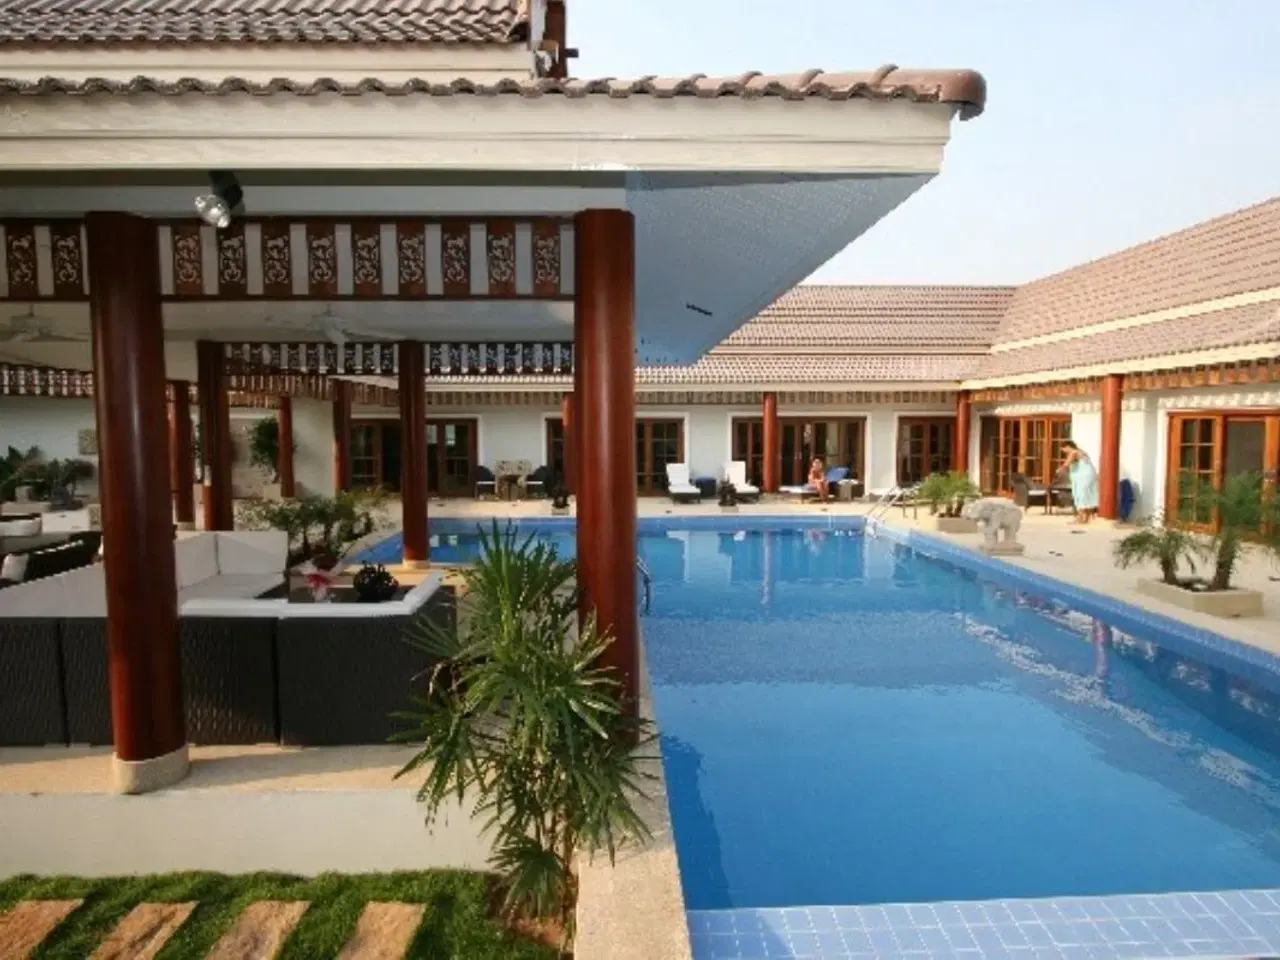 Billede 1 - Lej bolig i Hua Hin Thailand, Pool villa